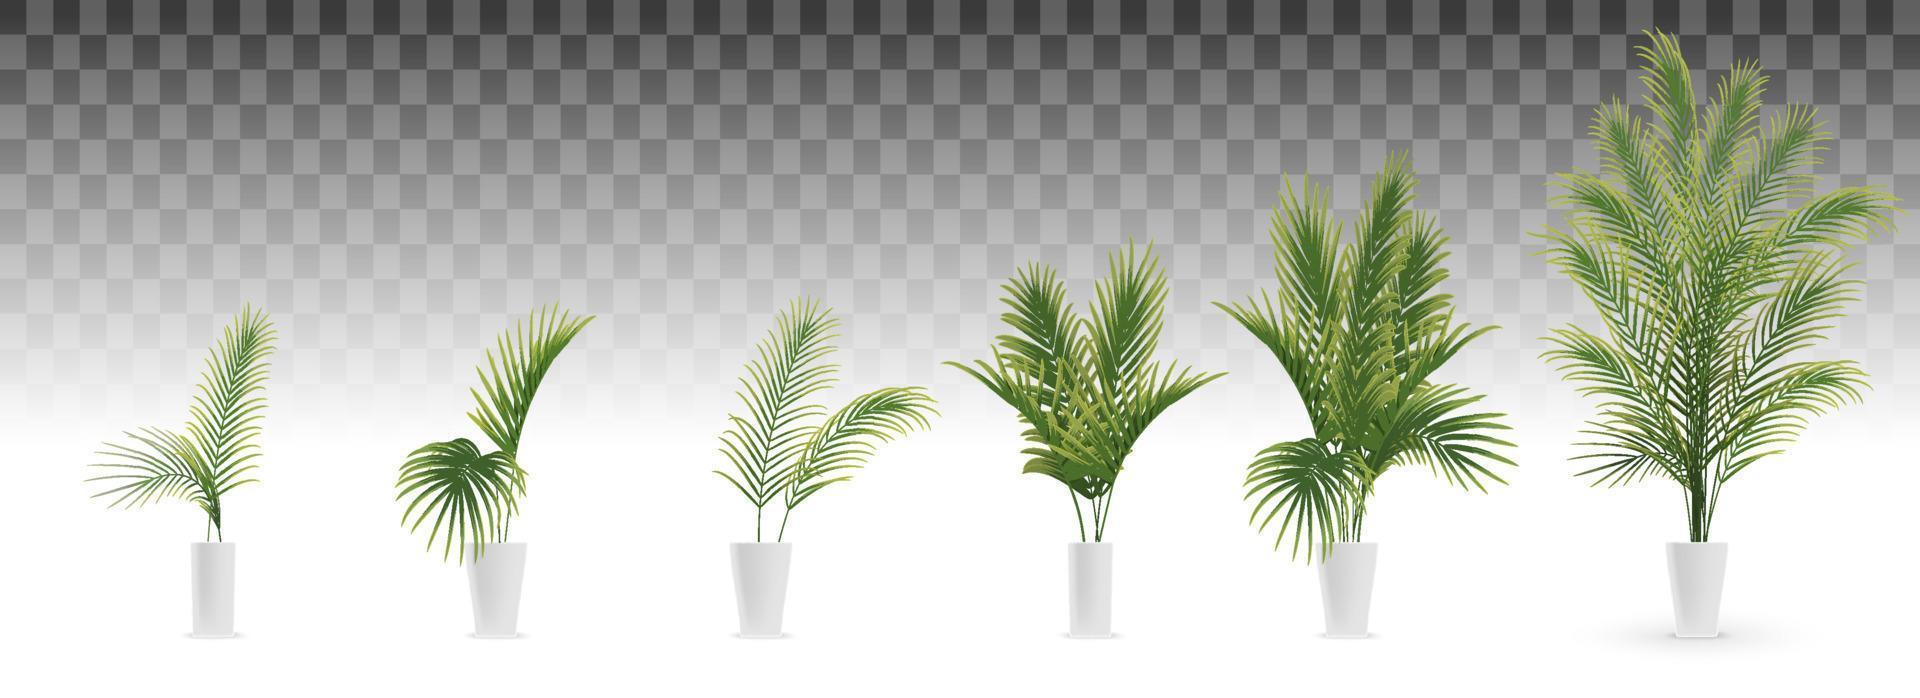 set palmboom in witte vaas vector